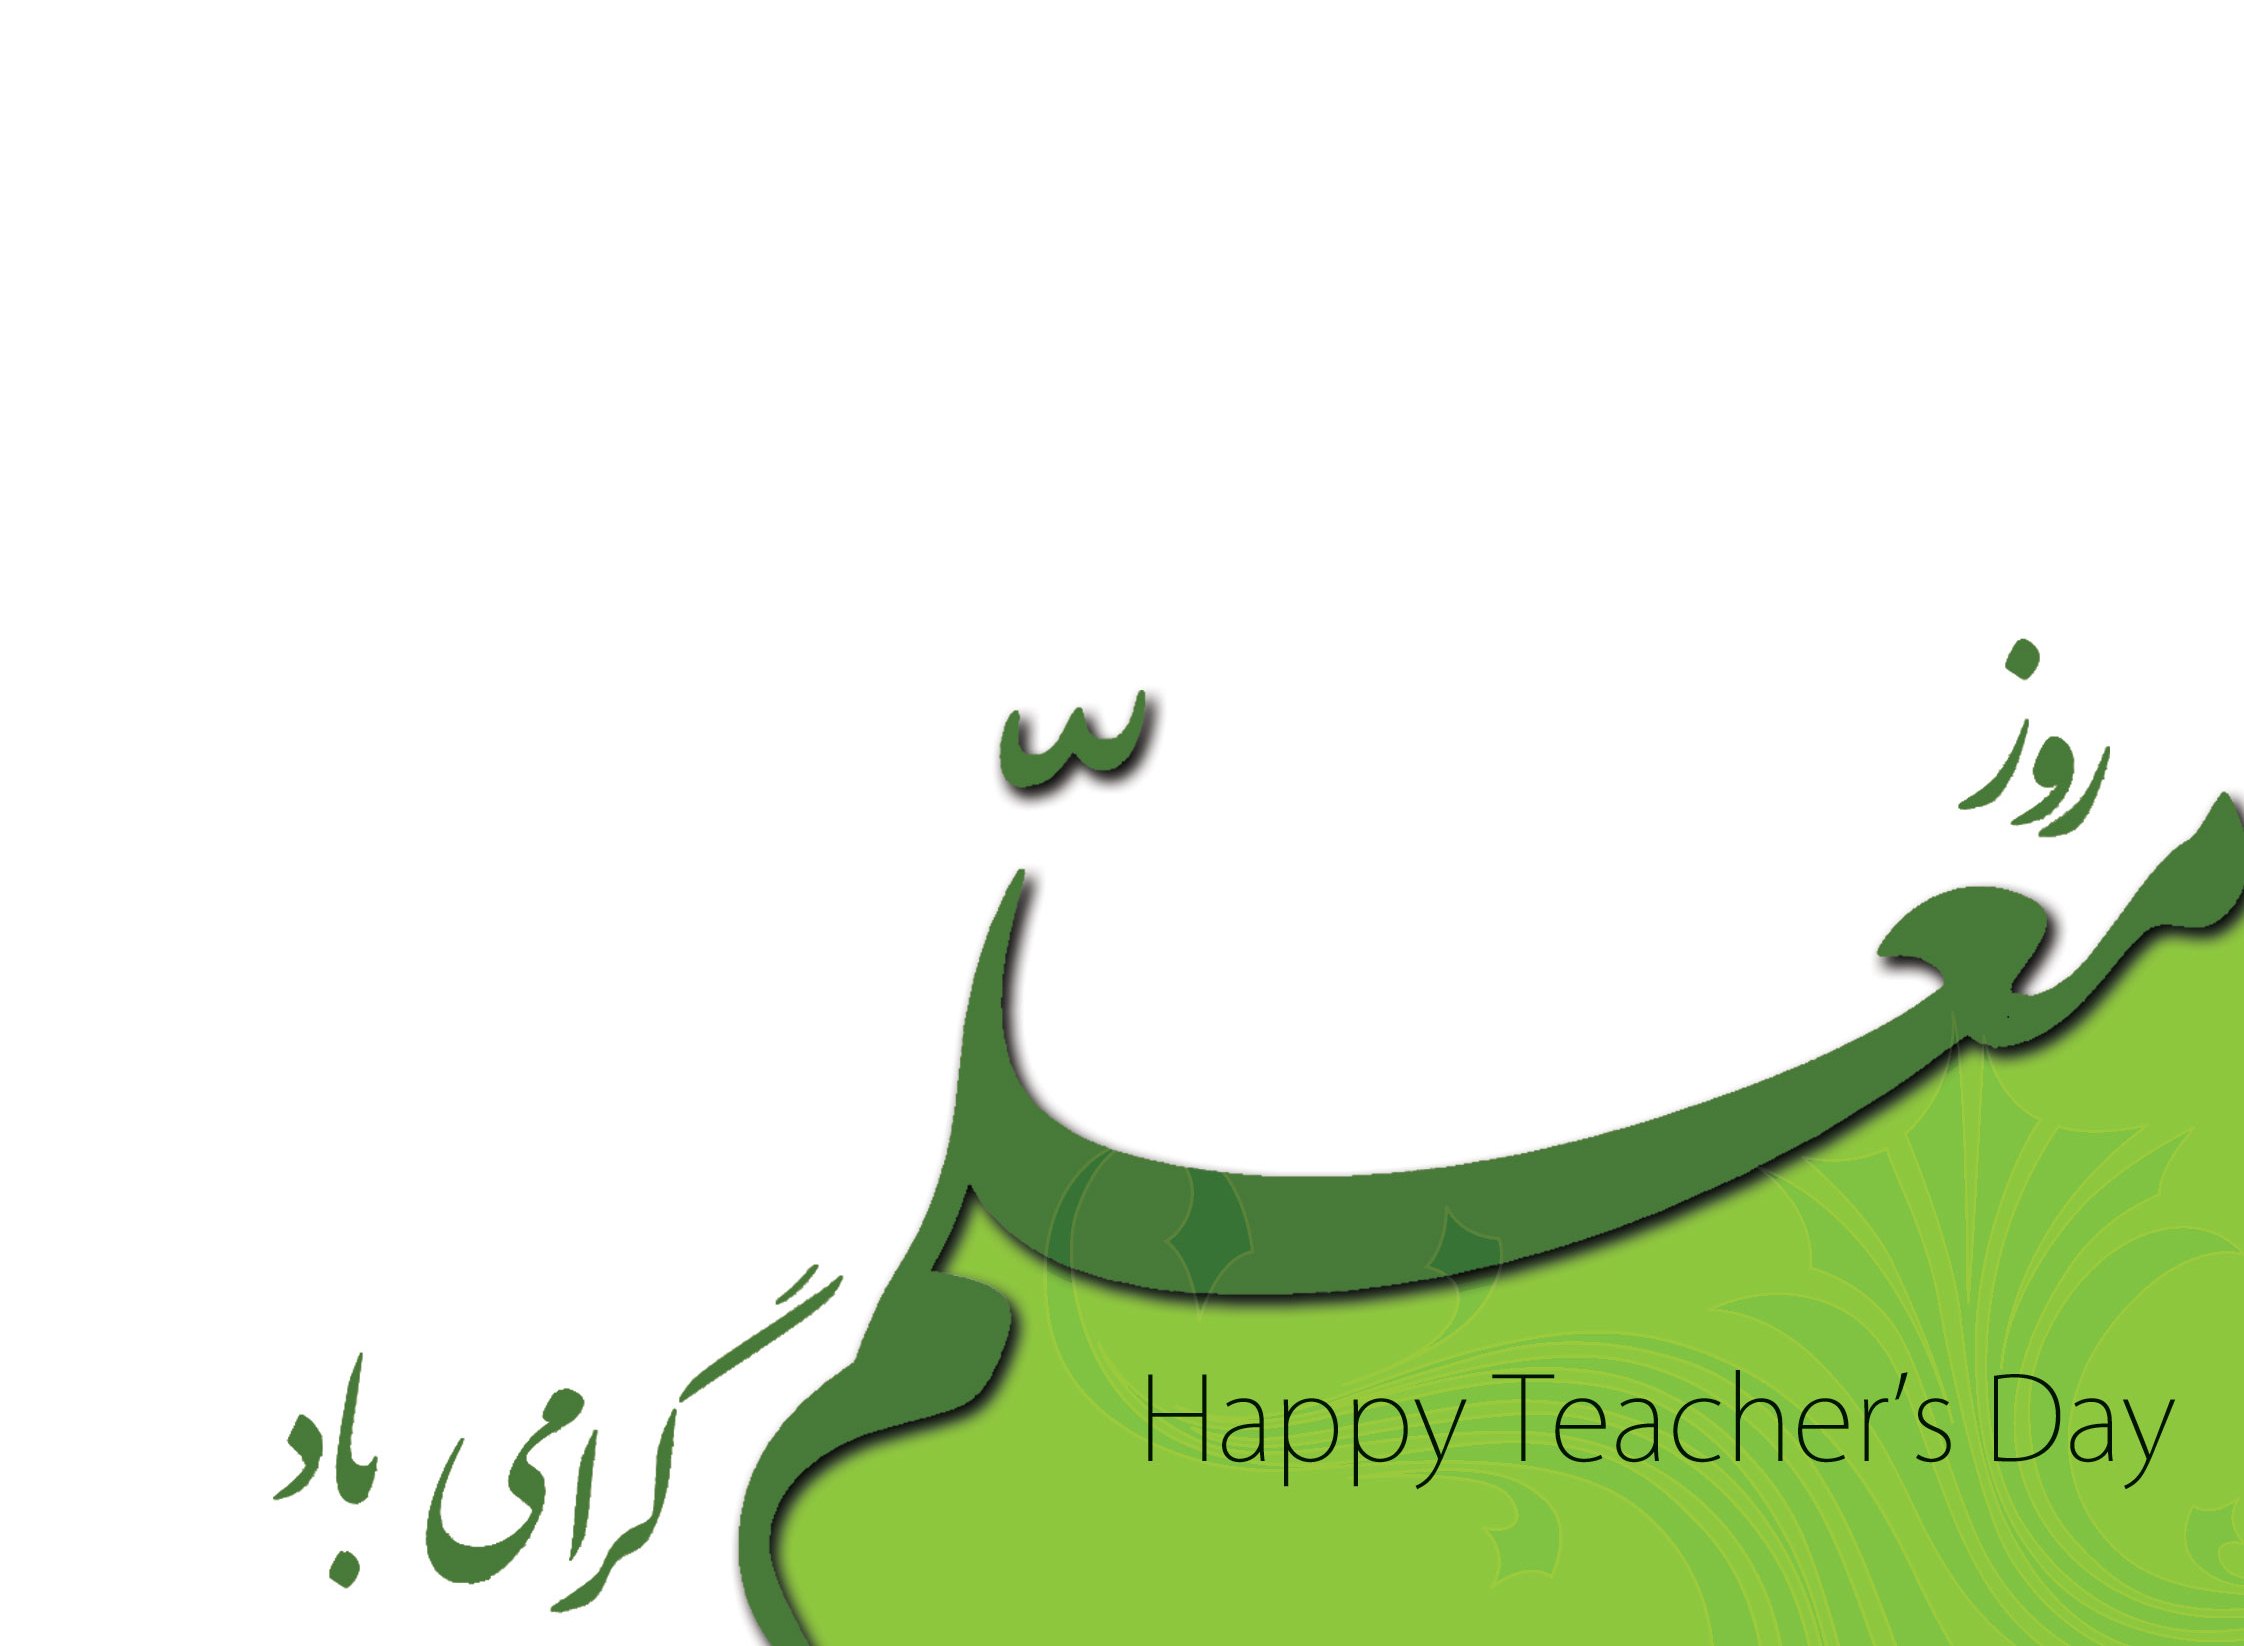  متن تبریک روز معلم